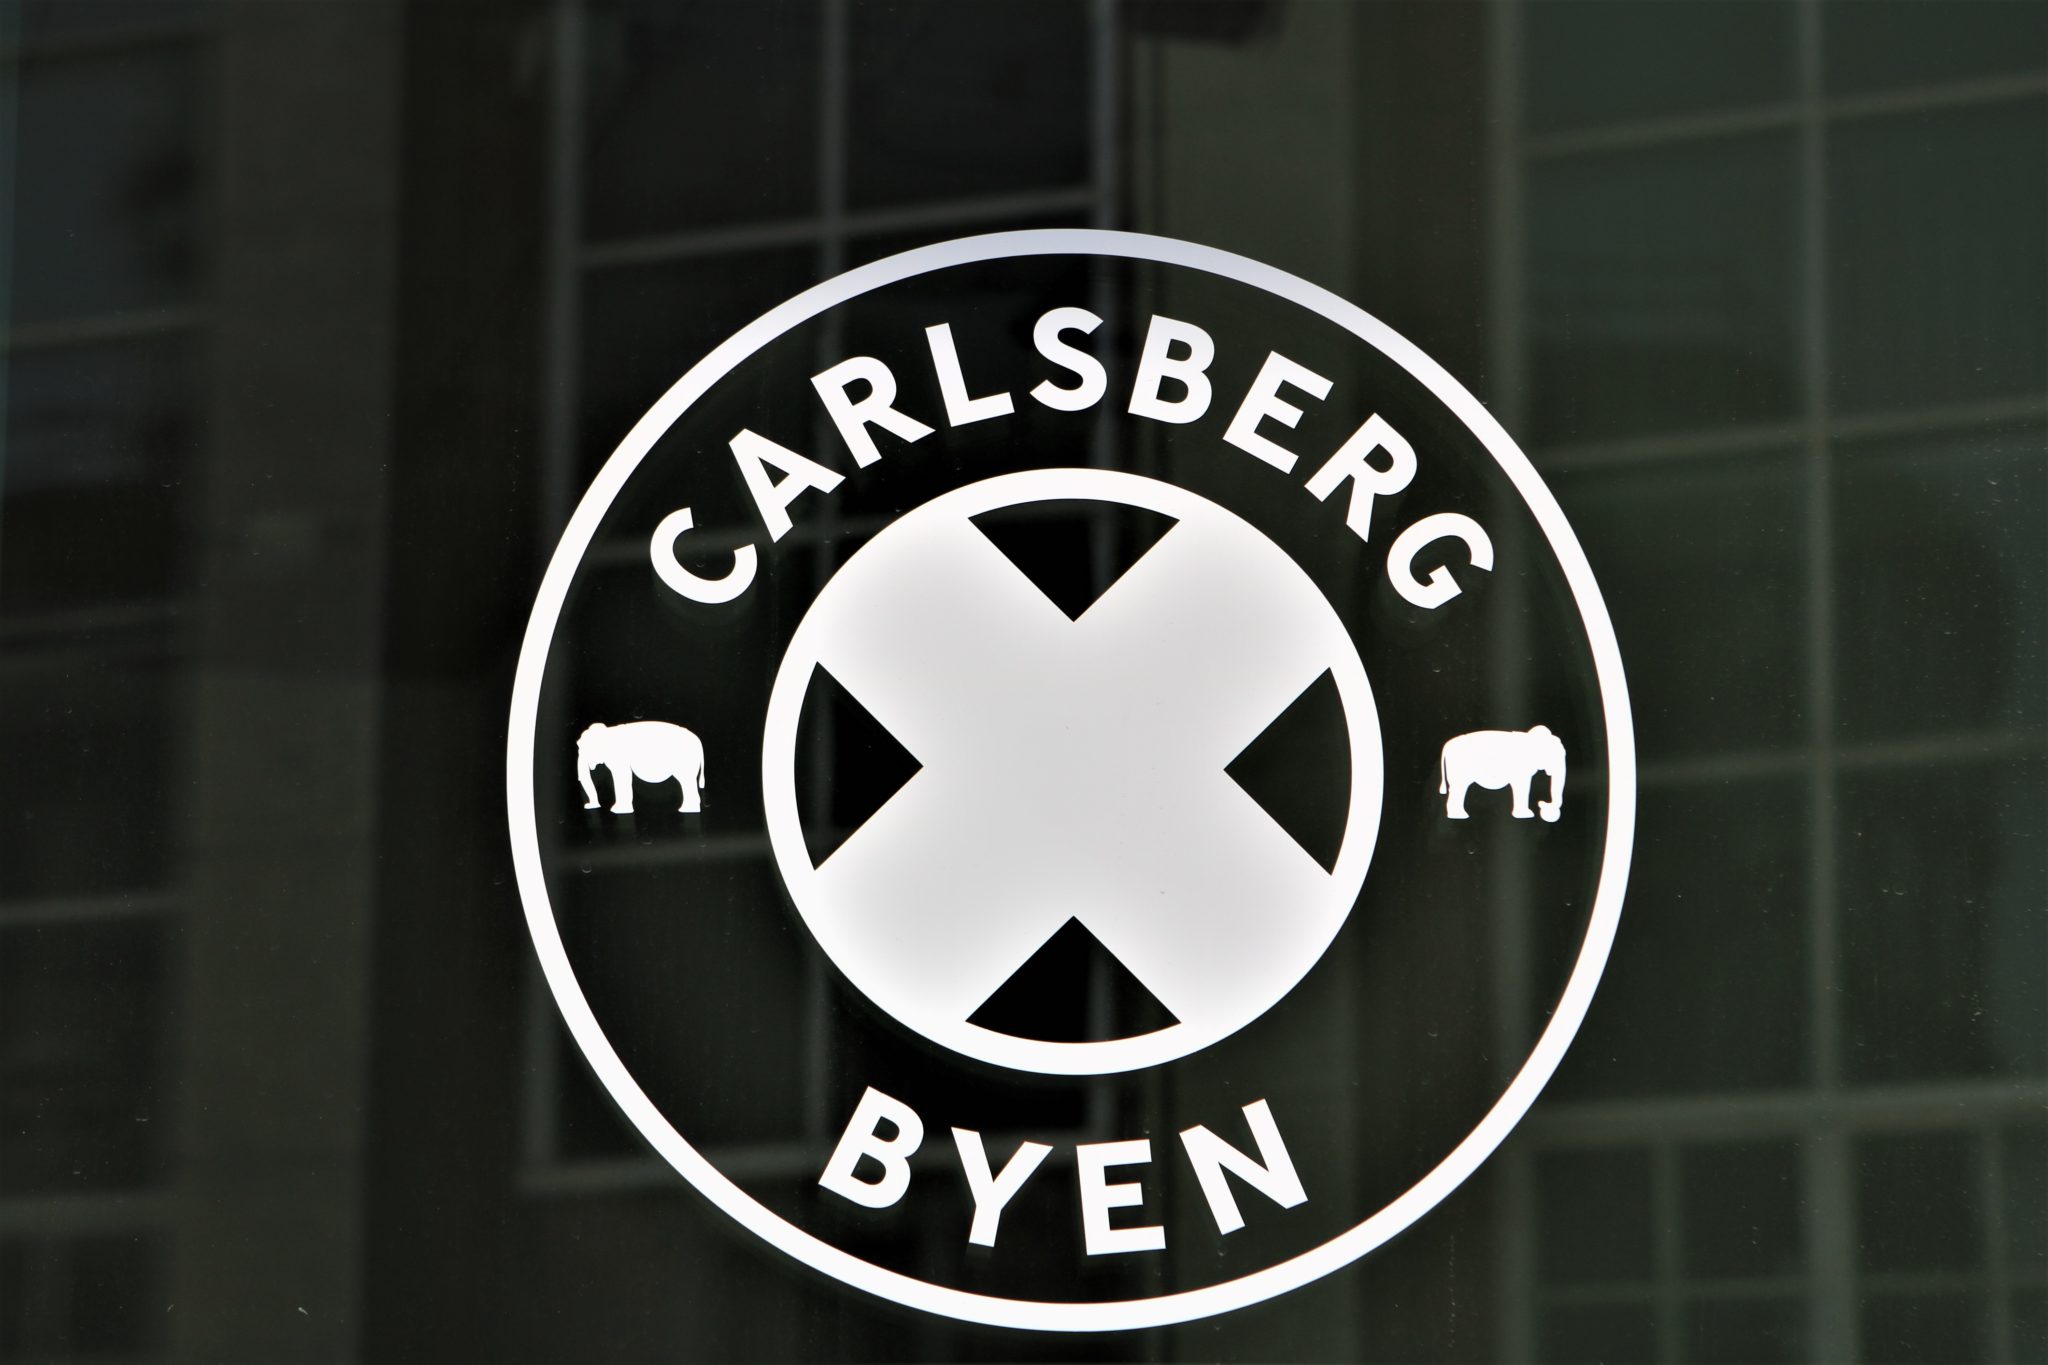 Ny butik åbner snart i Carlsberg Byen